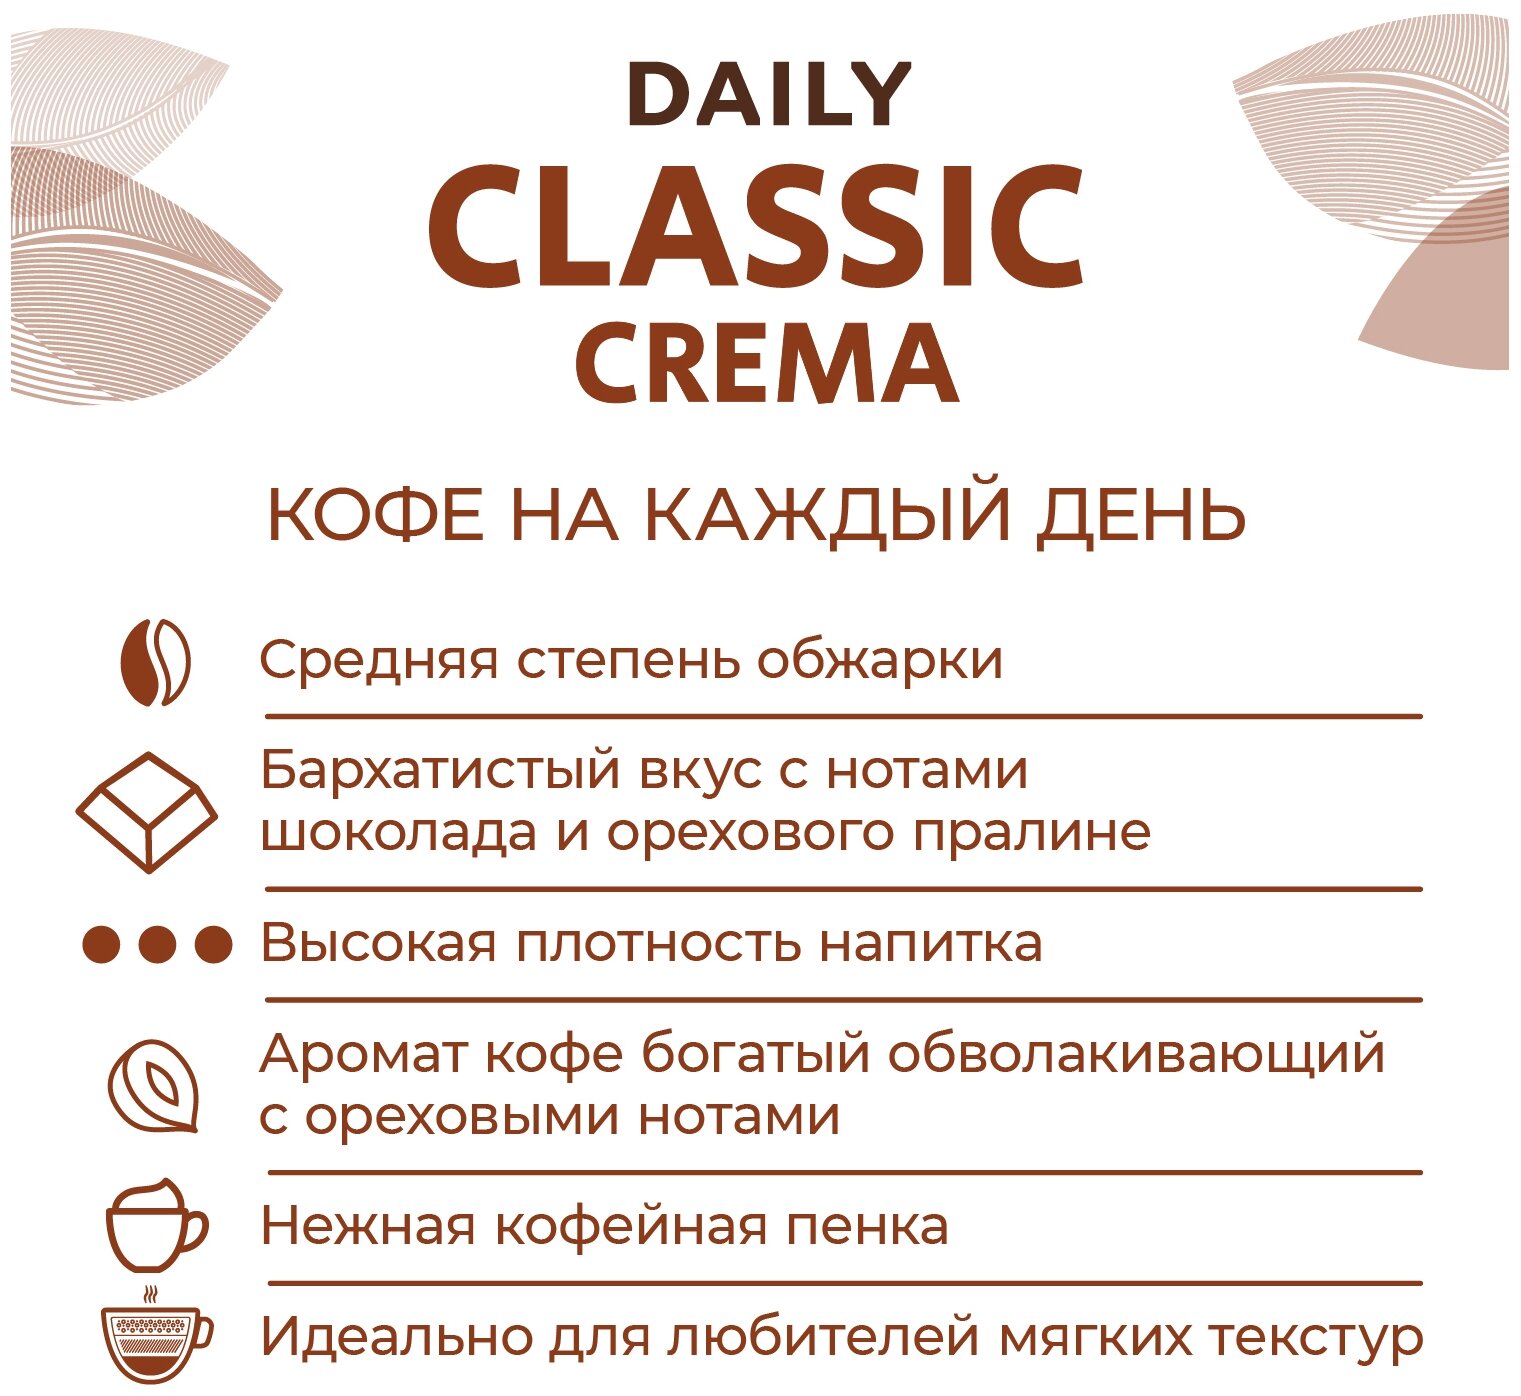 Кофе в зернах Poetti Daily Classic Crema 1кг ООО Милфудс - фото №3